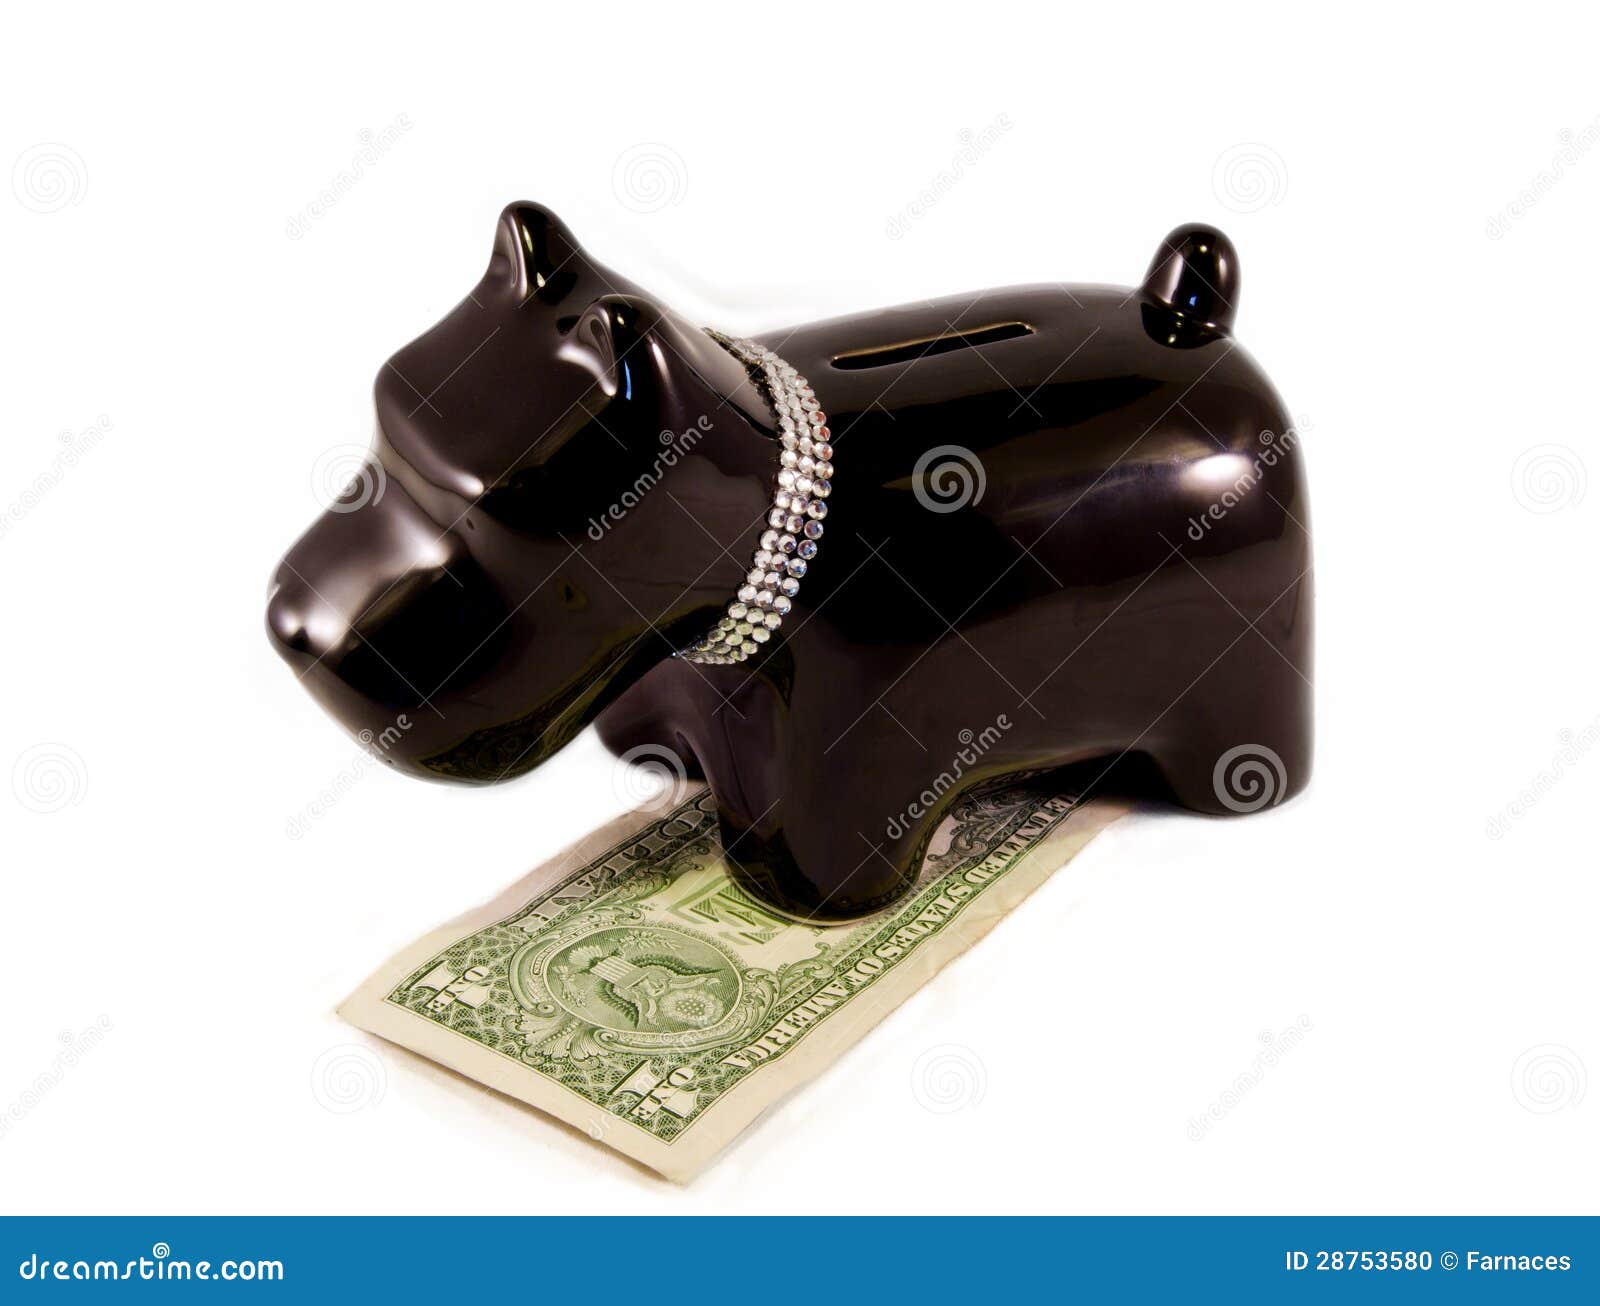 little dog moneybox